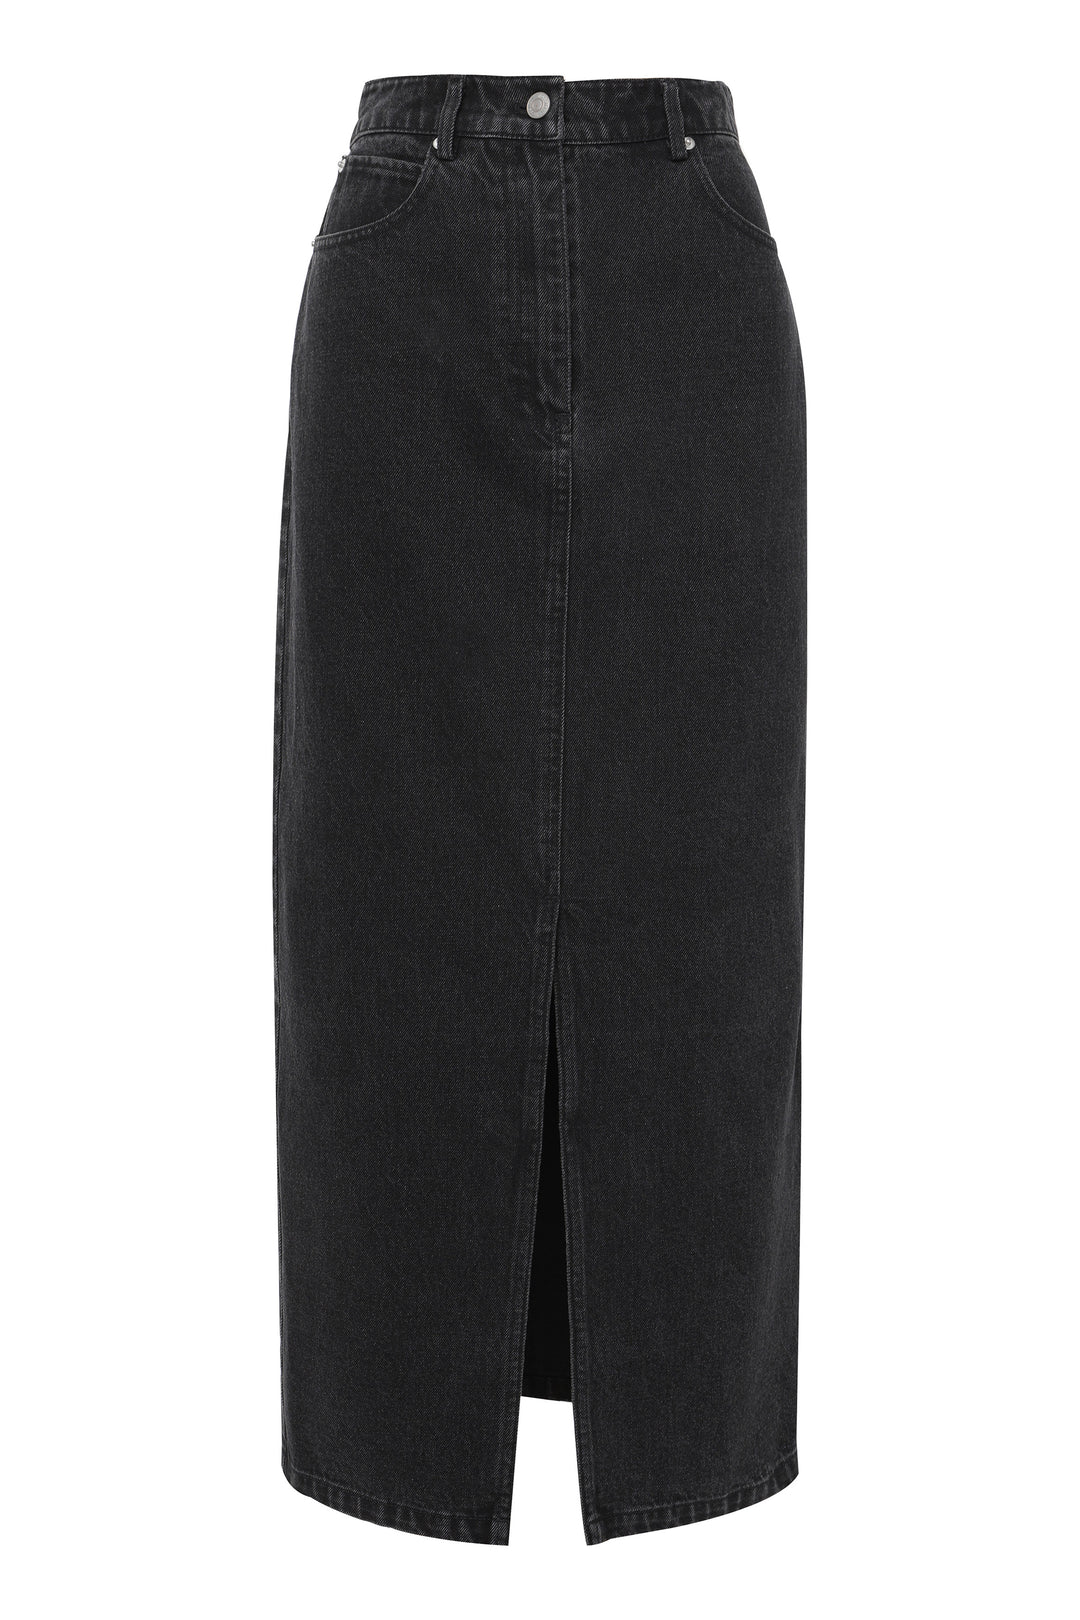 Bexley Midi Skirt - Black